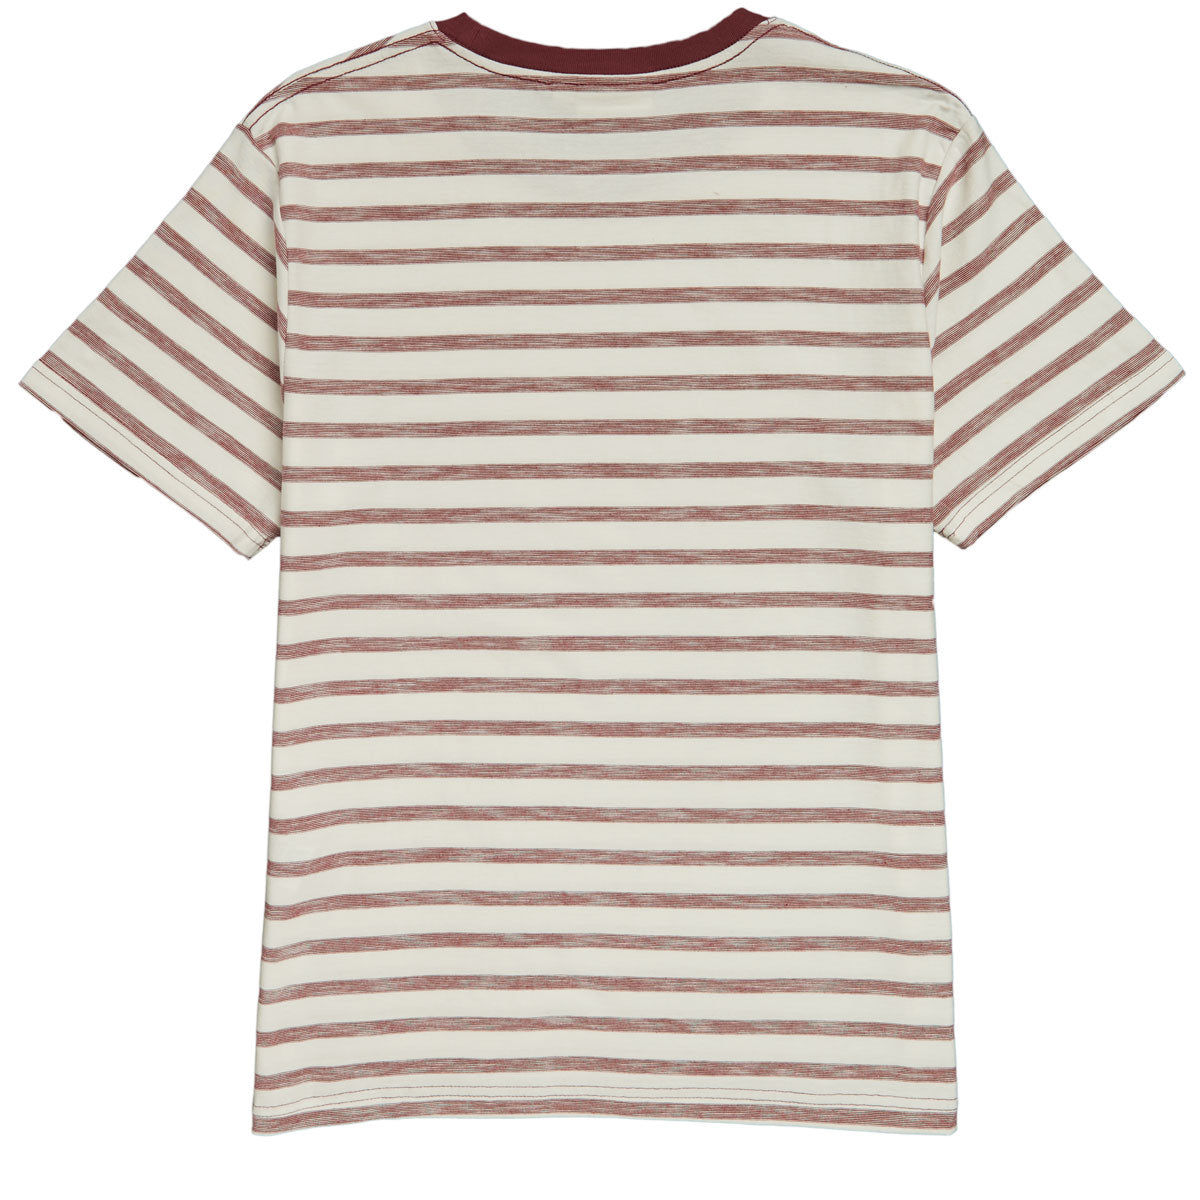 Rhythm Everyday Stripe T-Shirt - Mulberry image 2